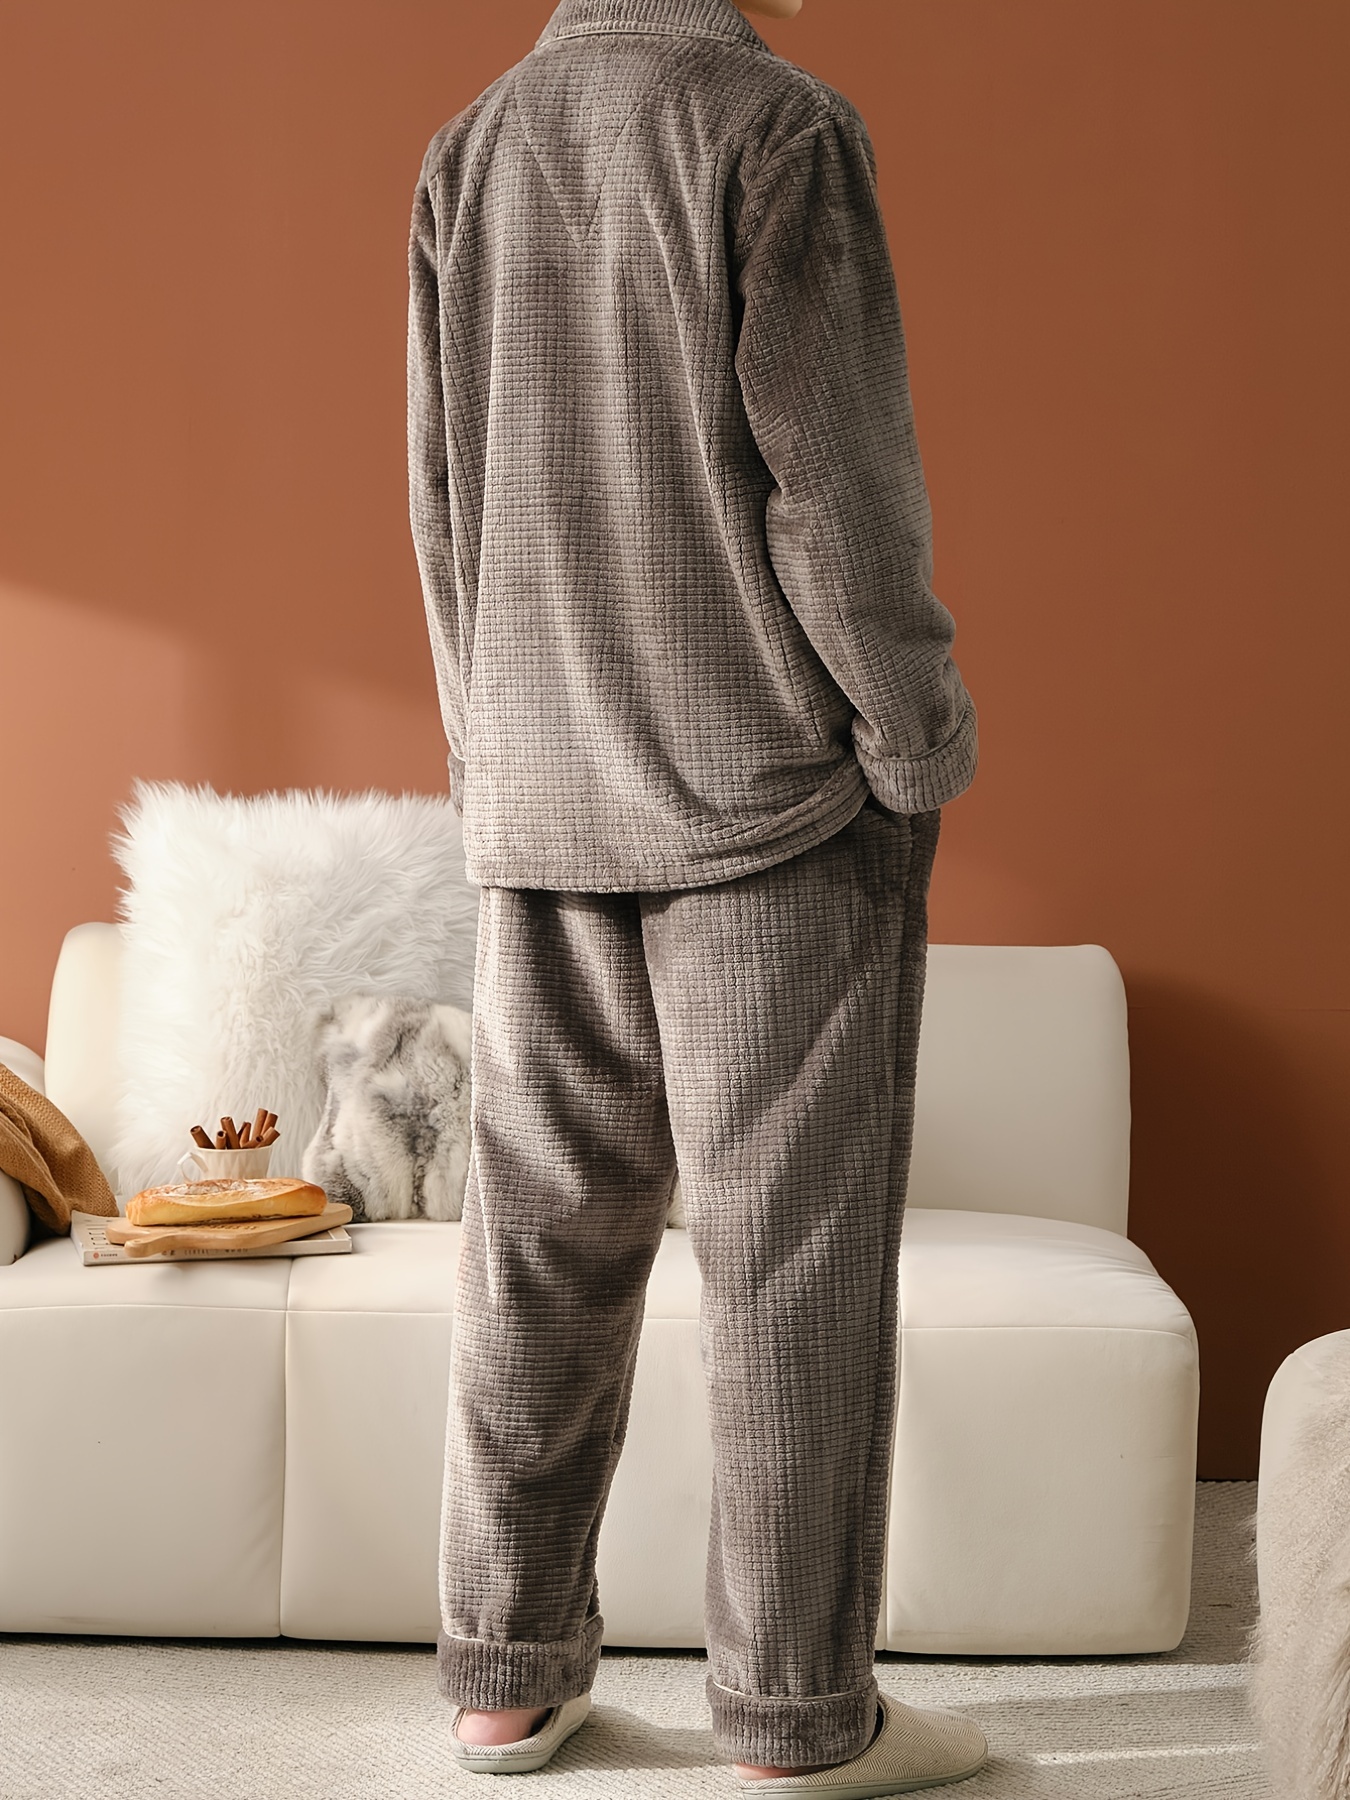 Men's Thermal Pajama/Sleepwear Sets - Perfect Winter Sleepwear – Noble Mount